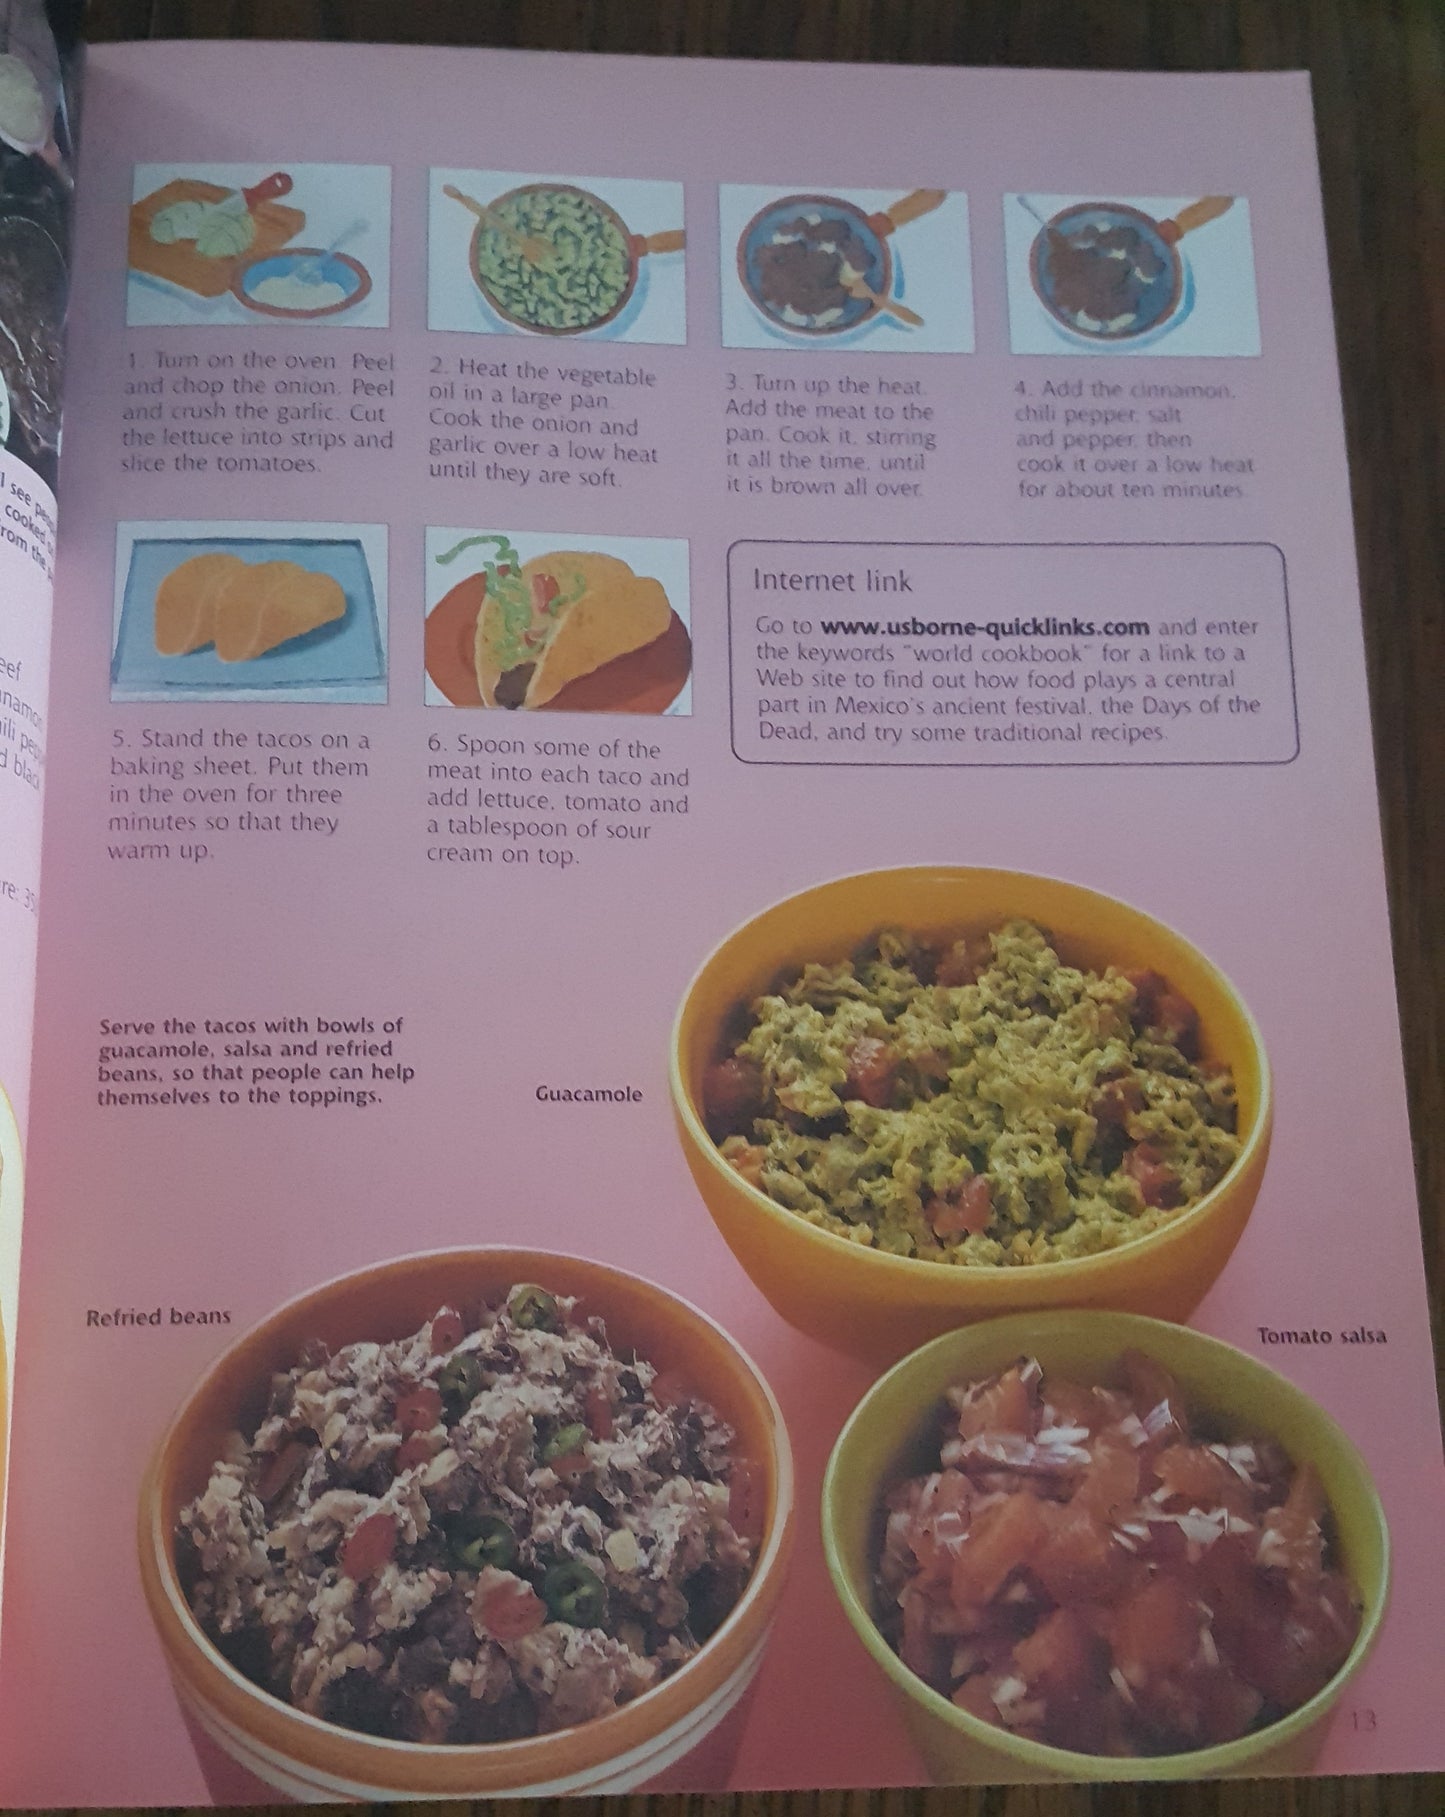 Usborne Internet Linked Children's World Cookbook